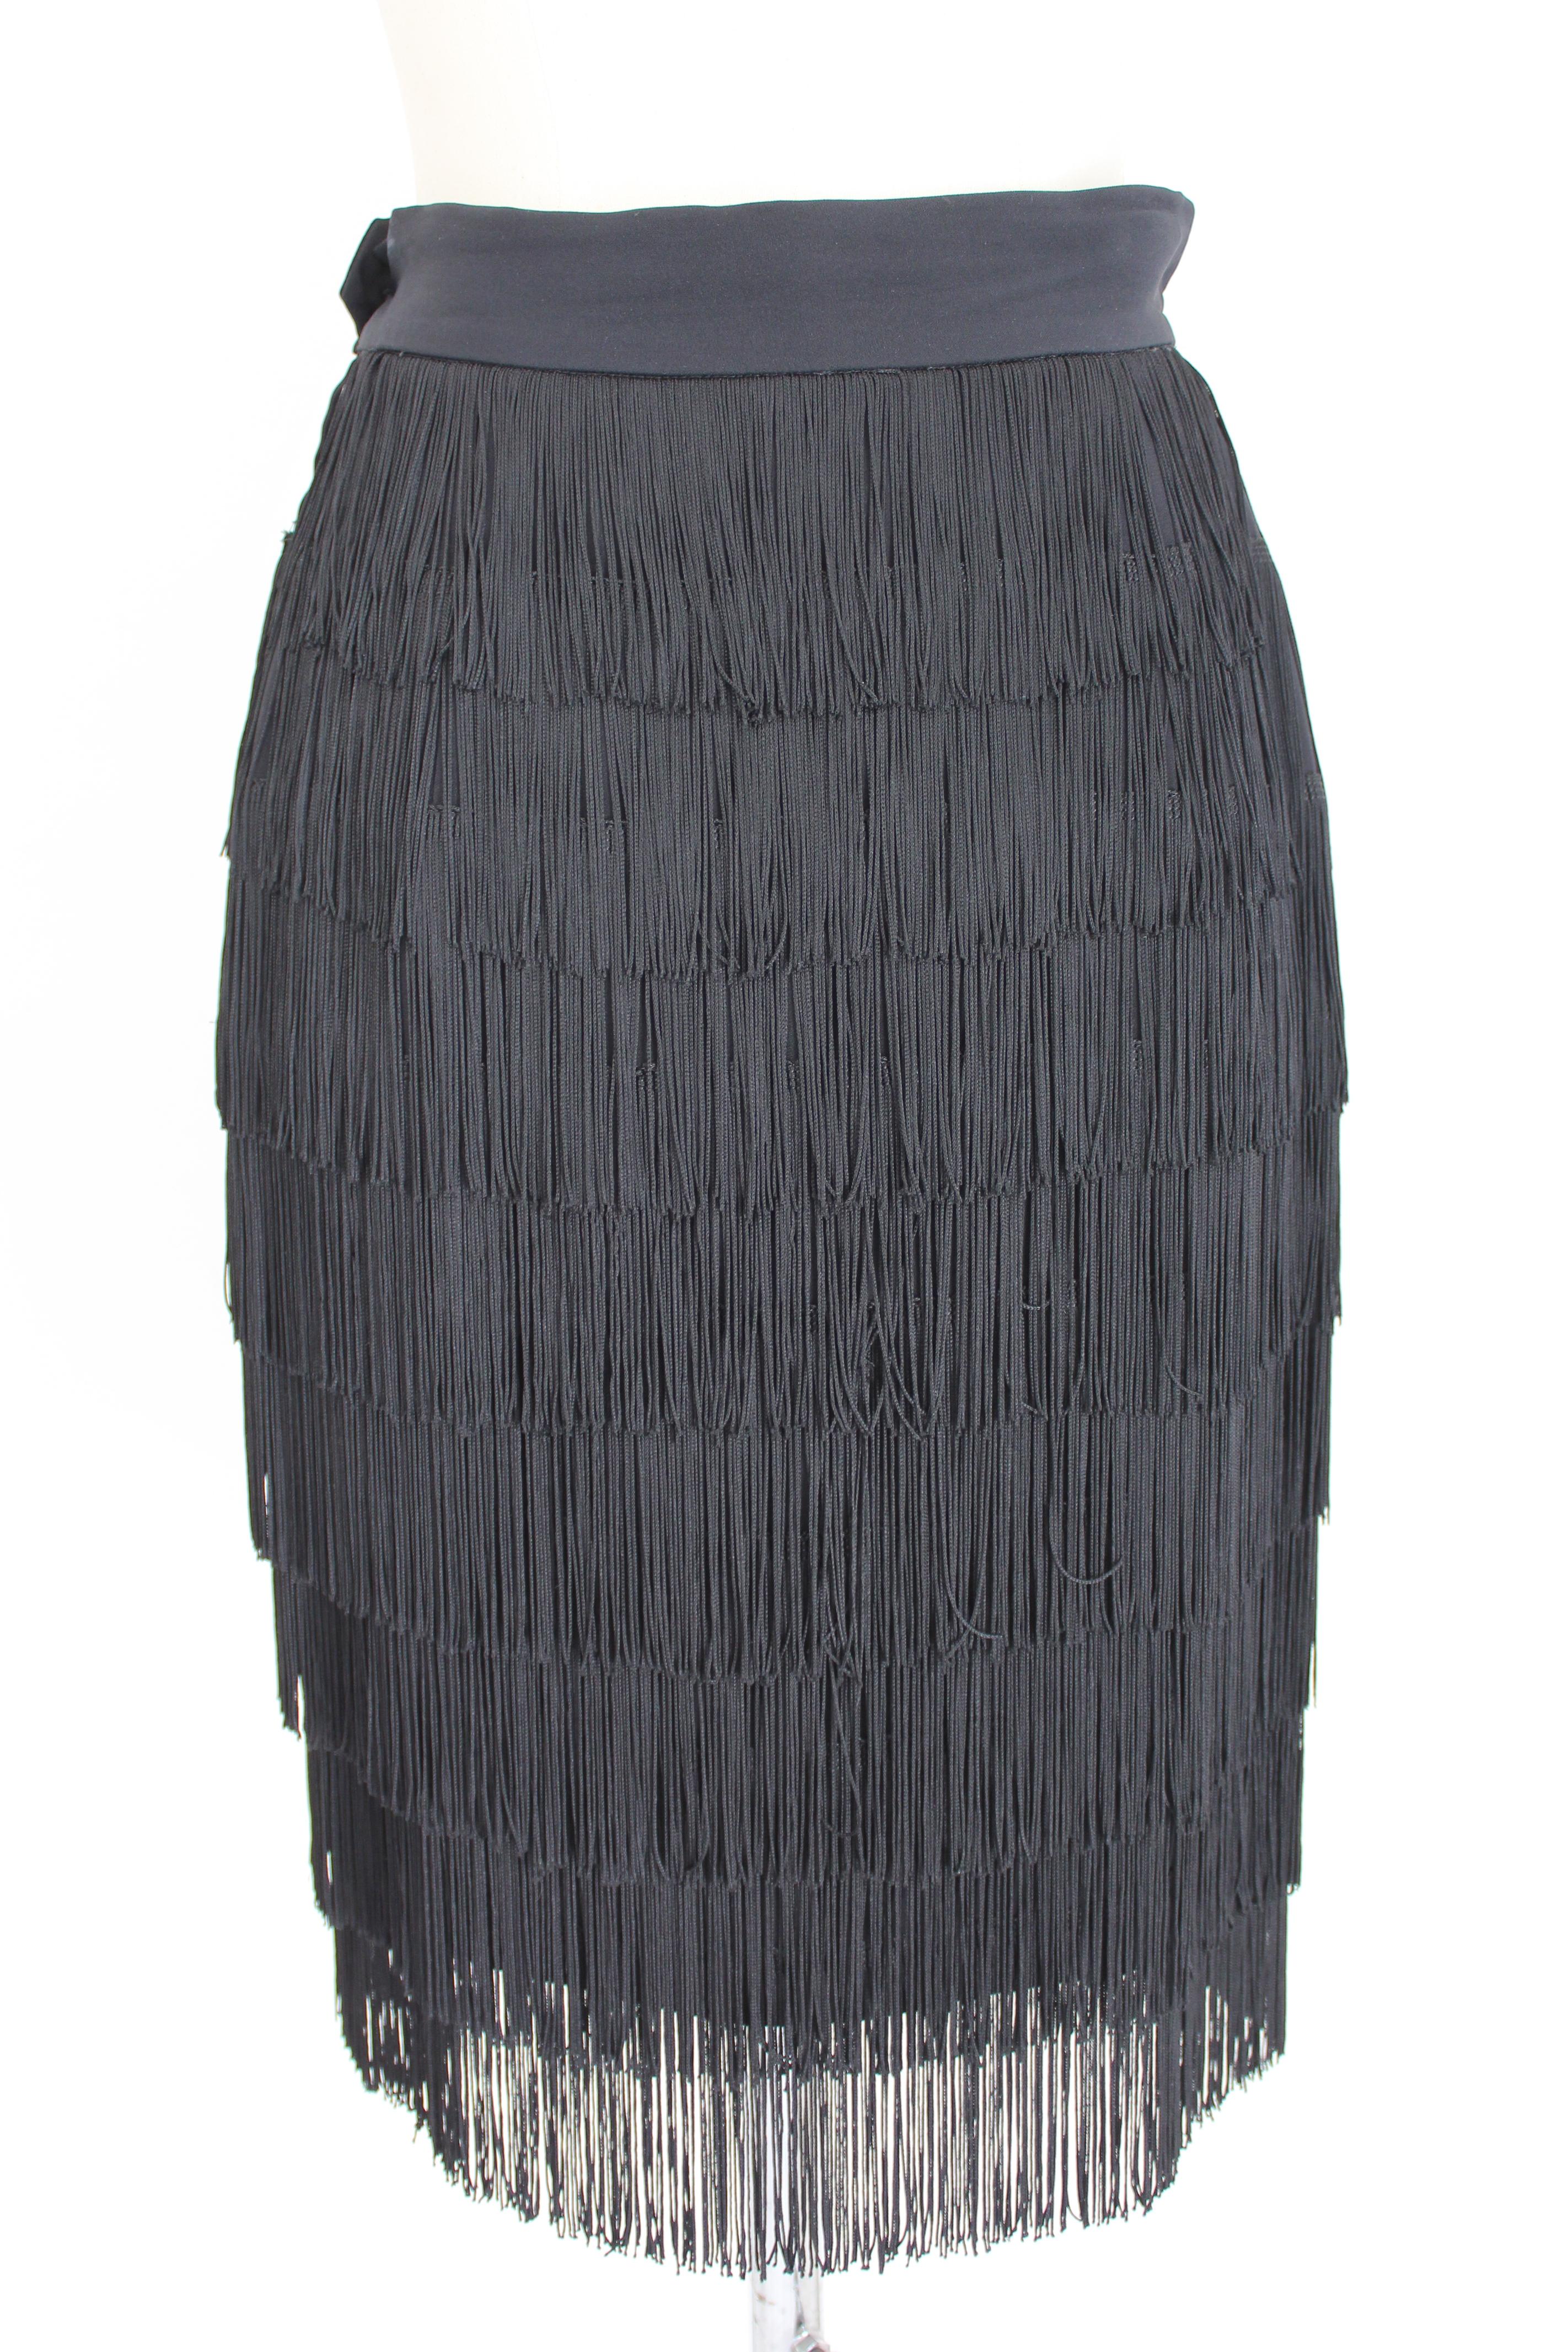 Moschino Black Fringed Charleston Evening Skirt Suit Dress 1990s 1